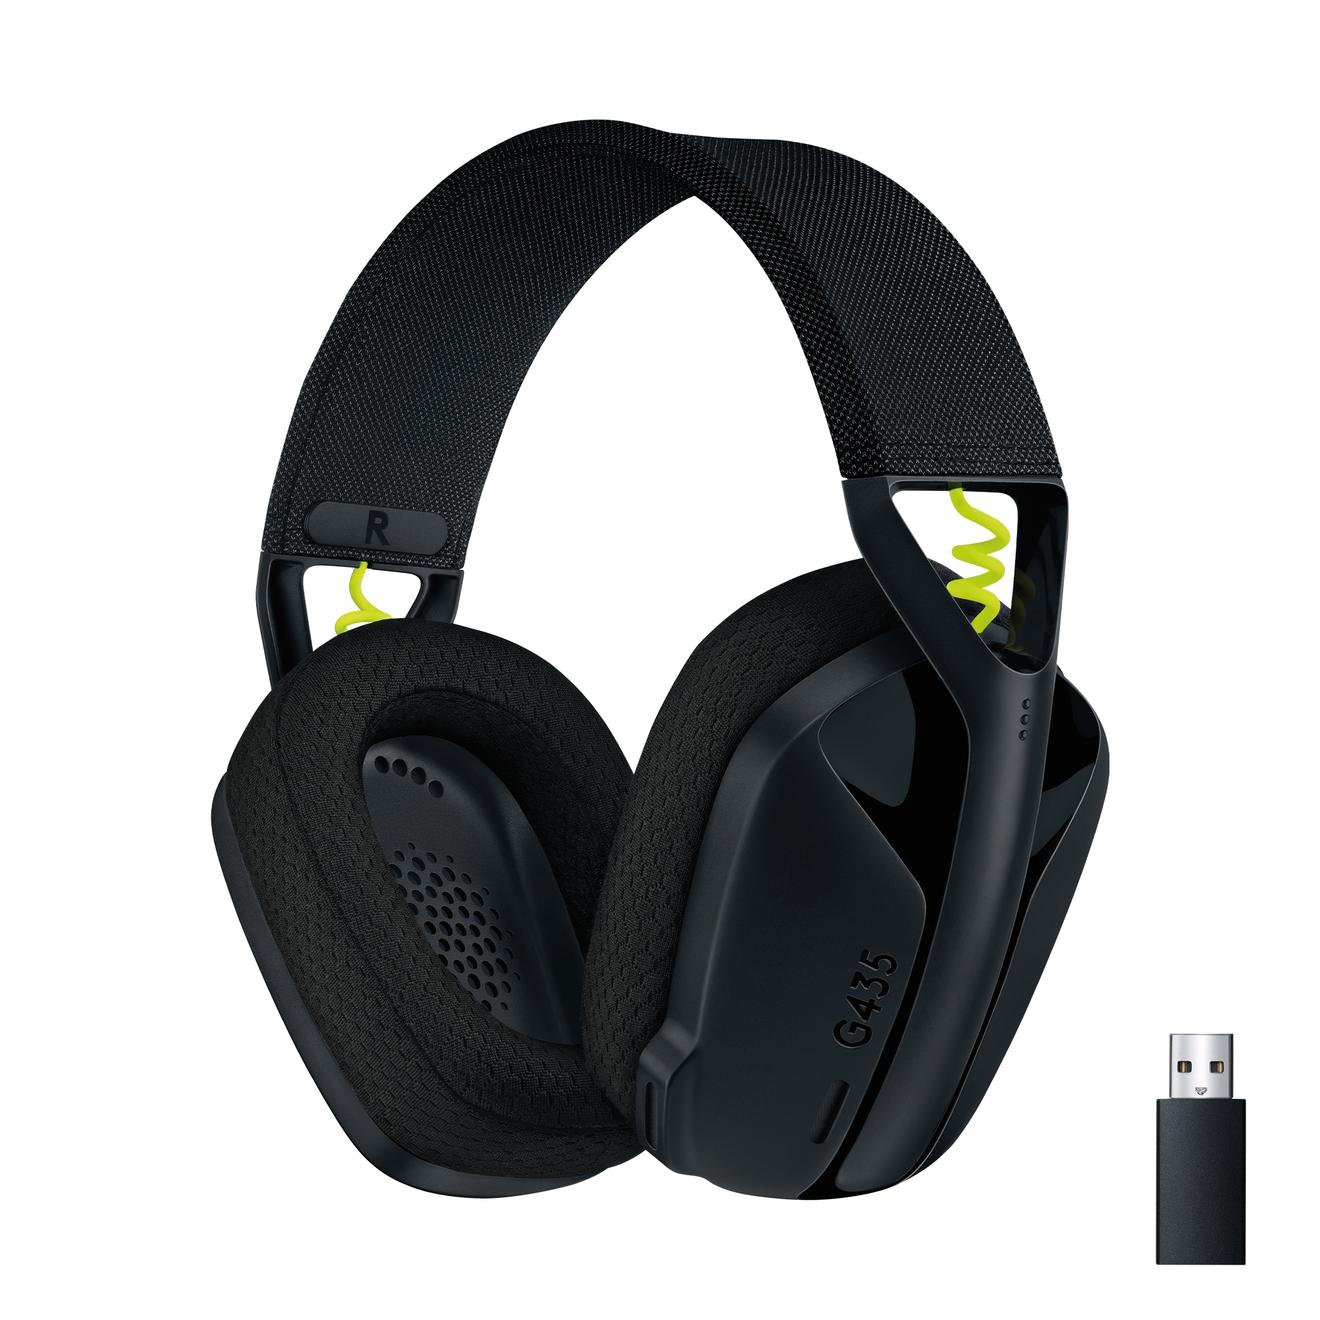 Offerta per Logitech - G G435 LIGHTSPEED Cuffie Gaming Wireless Bluetooth - Cuffie Over Ear Leggere, Microfoni Integrati, Batteria da 18 Ore, Compatibile con Dolby Atmos, PC, PS4, PS5, Smartphone. Nero a 49,99€ in Comet